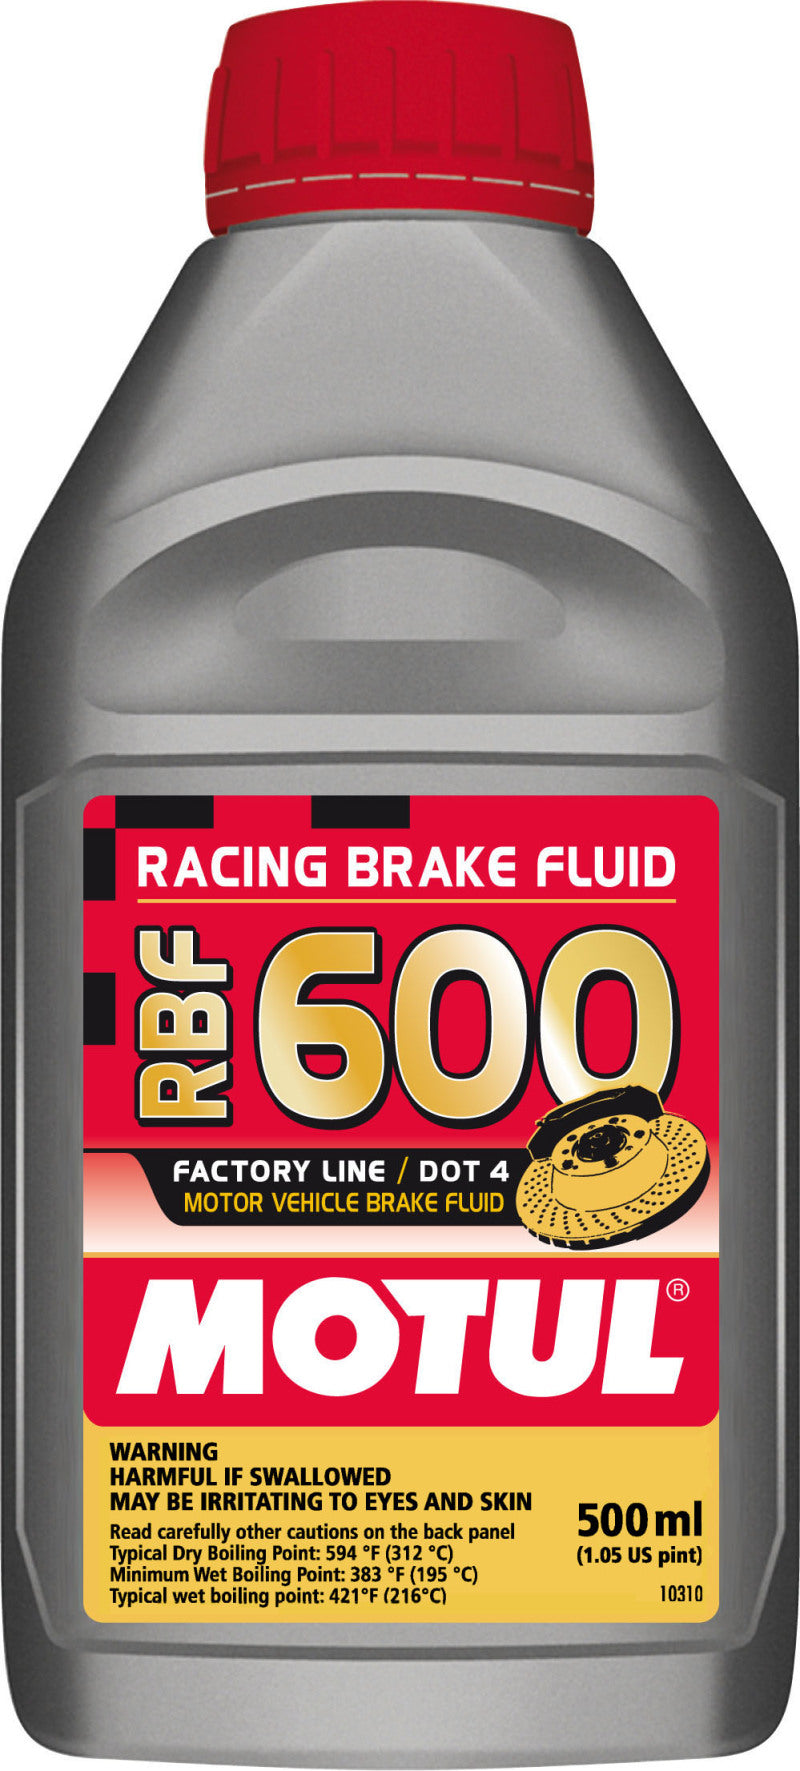 Motul 1/2L Brake Fluid RBF 600 - Racing DOT 4 (Case of 12)